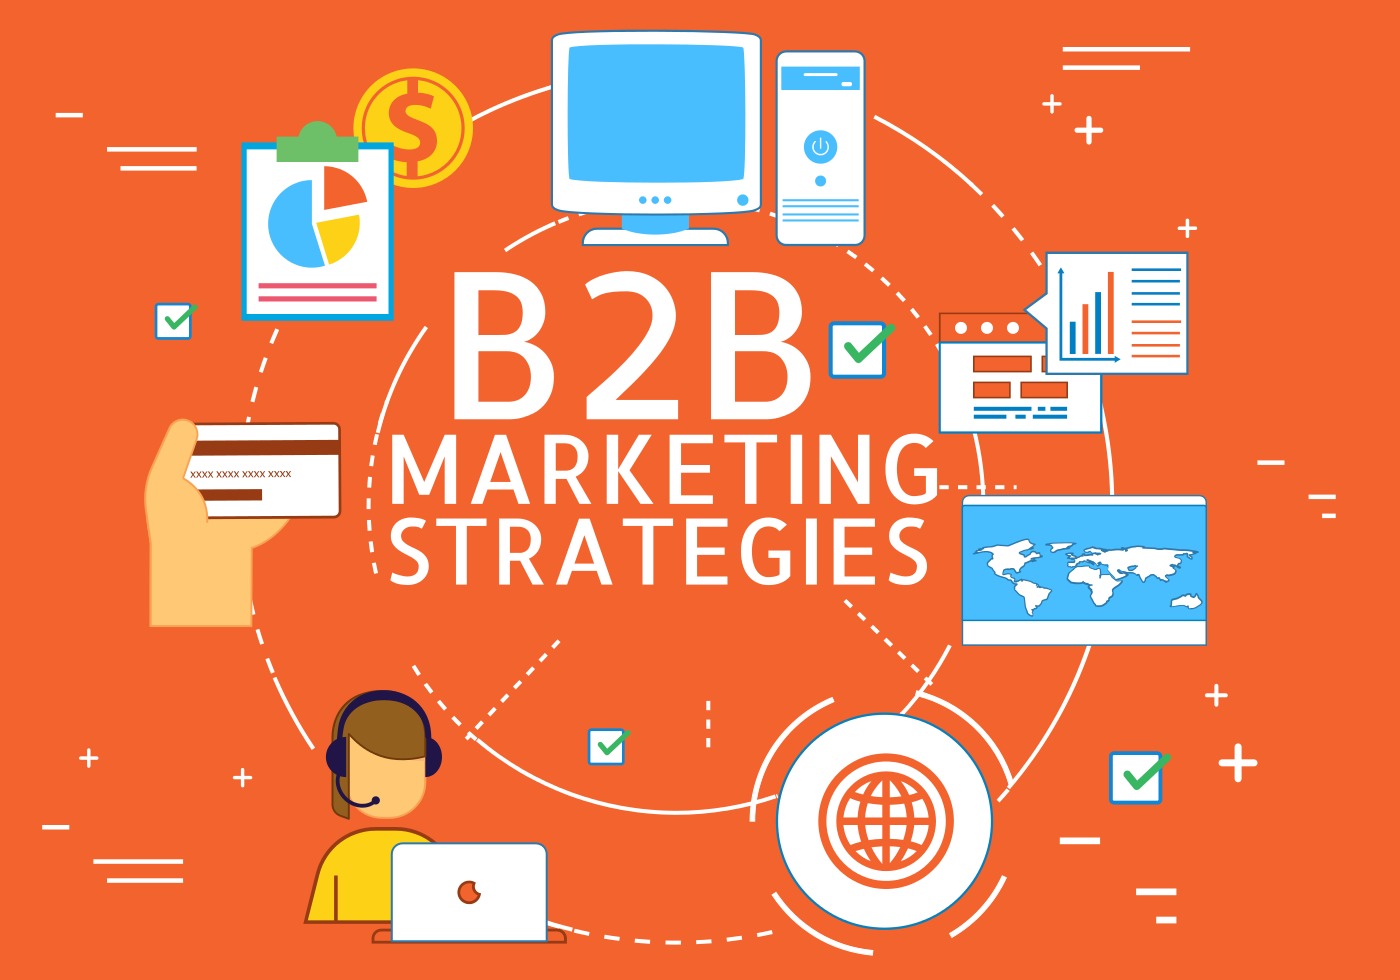 5 B2B Marketing Strategy To Build Business Presence On Instagram